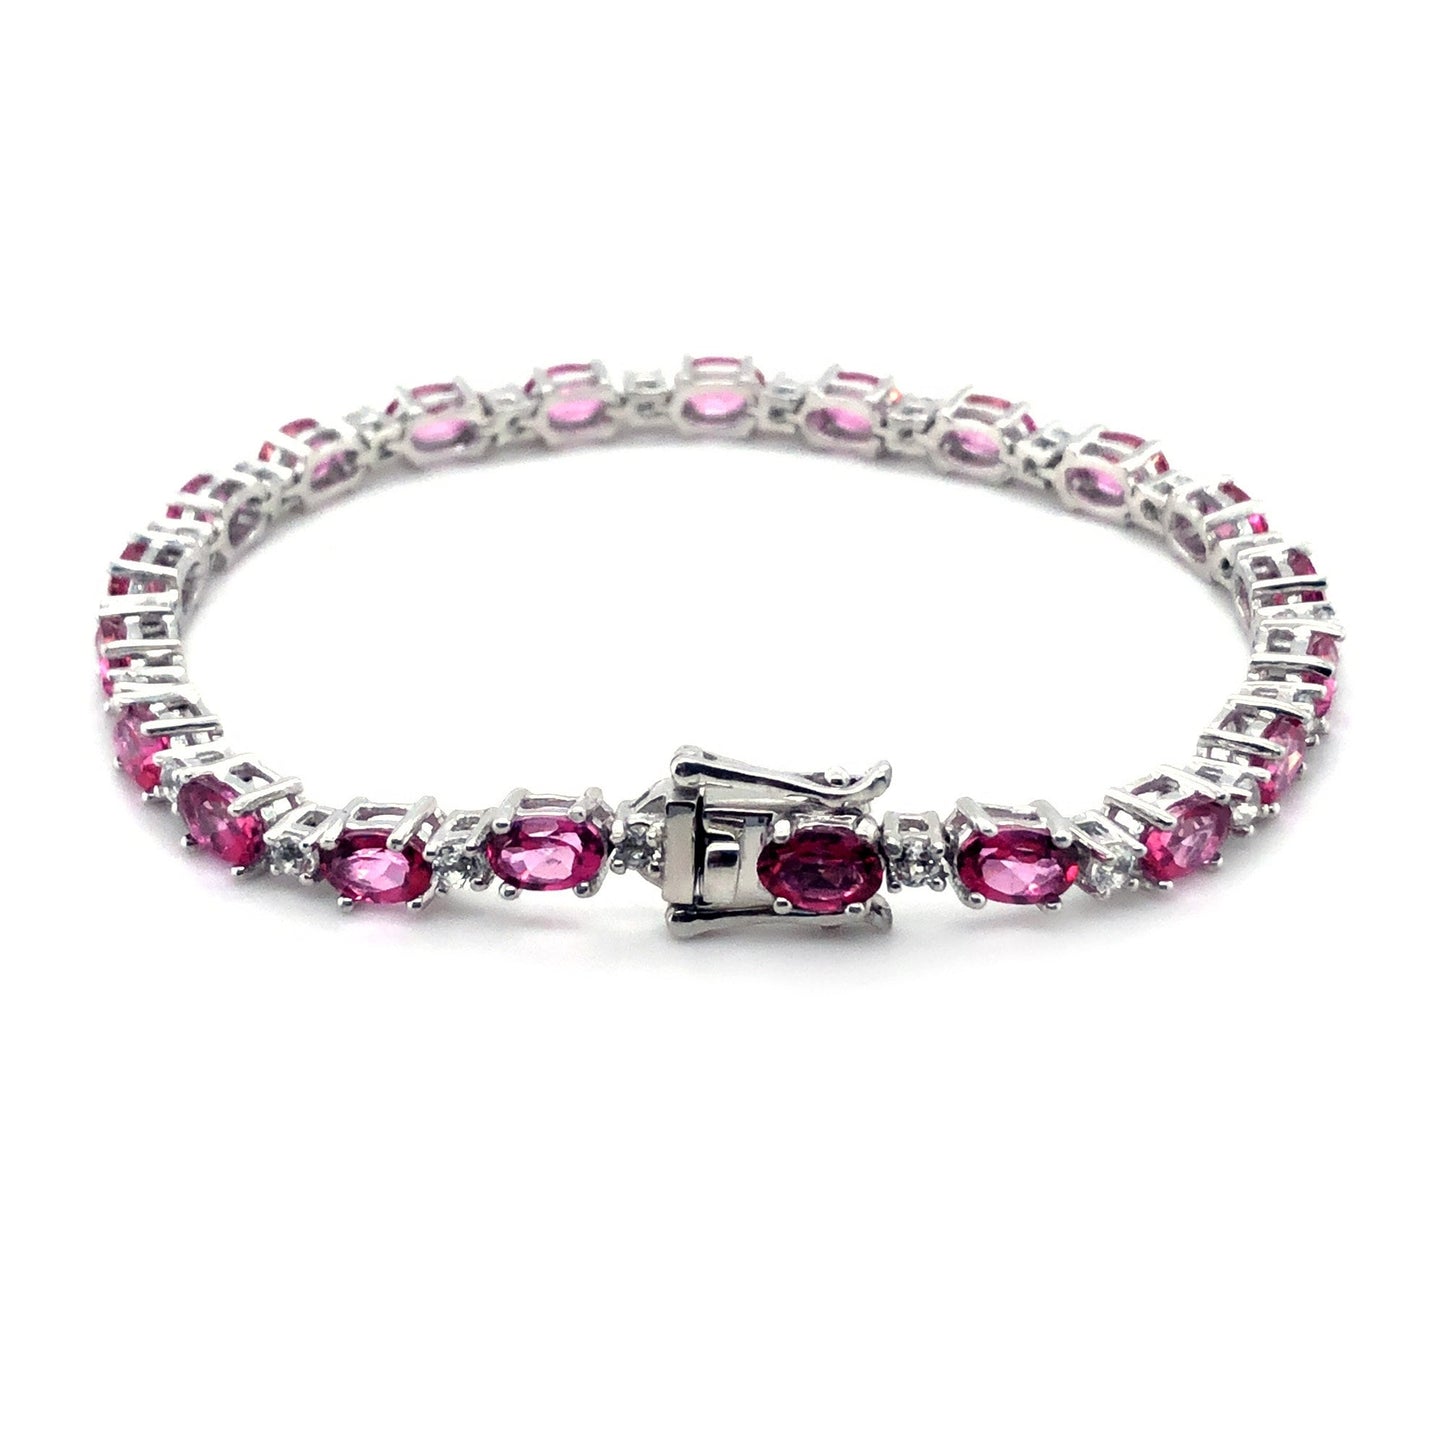 925 Sterling Silver Fine Jewelry Tennis Bracelet Natural Pink Topaz Gemstone Silver Bracelet Wedding Jewelry Anniversary Gift For Her